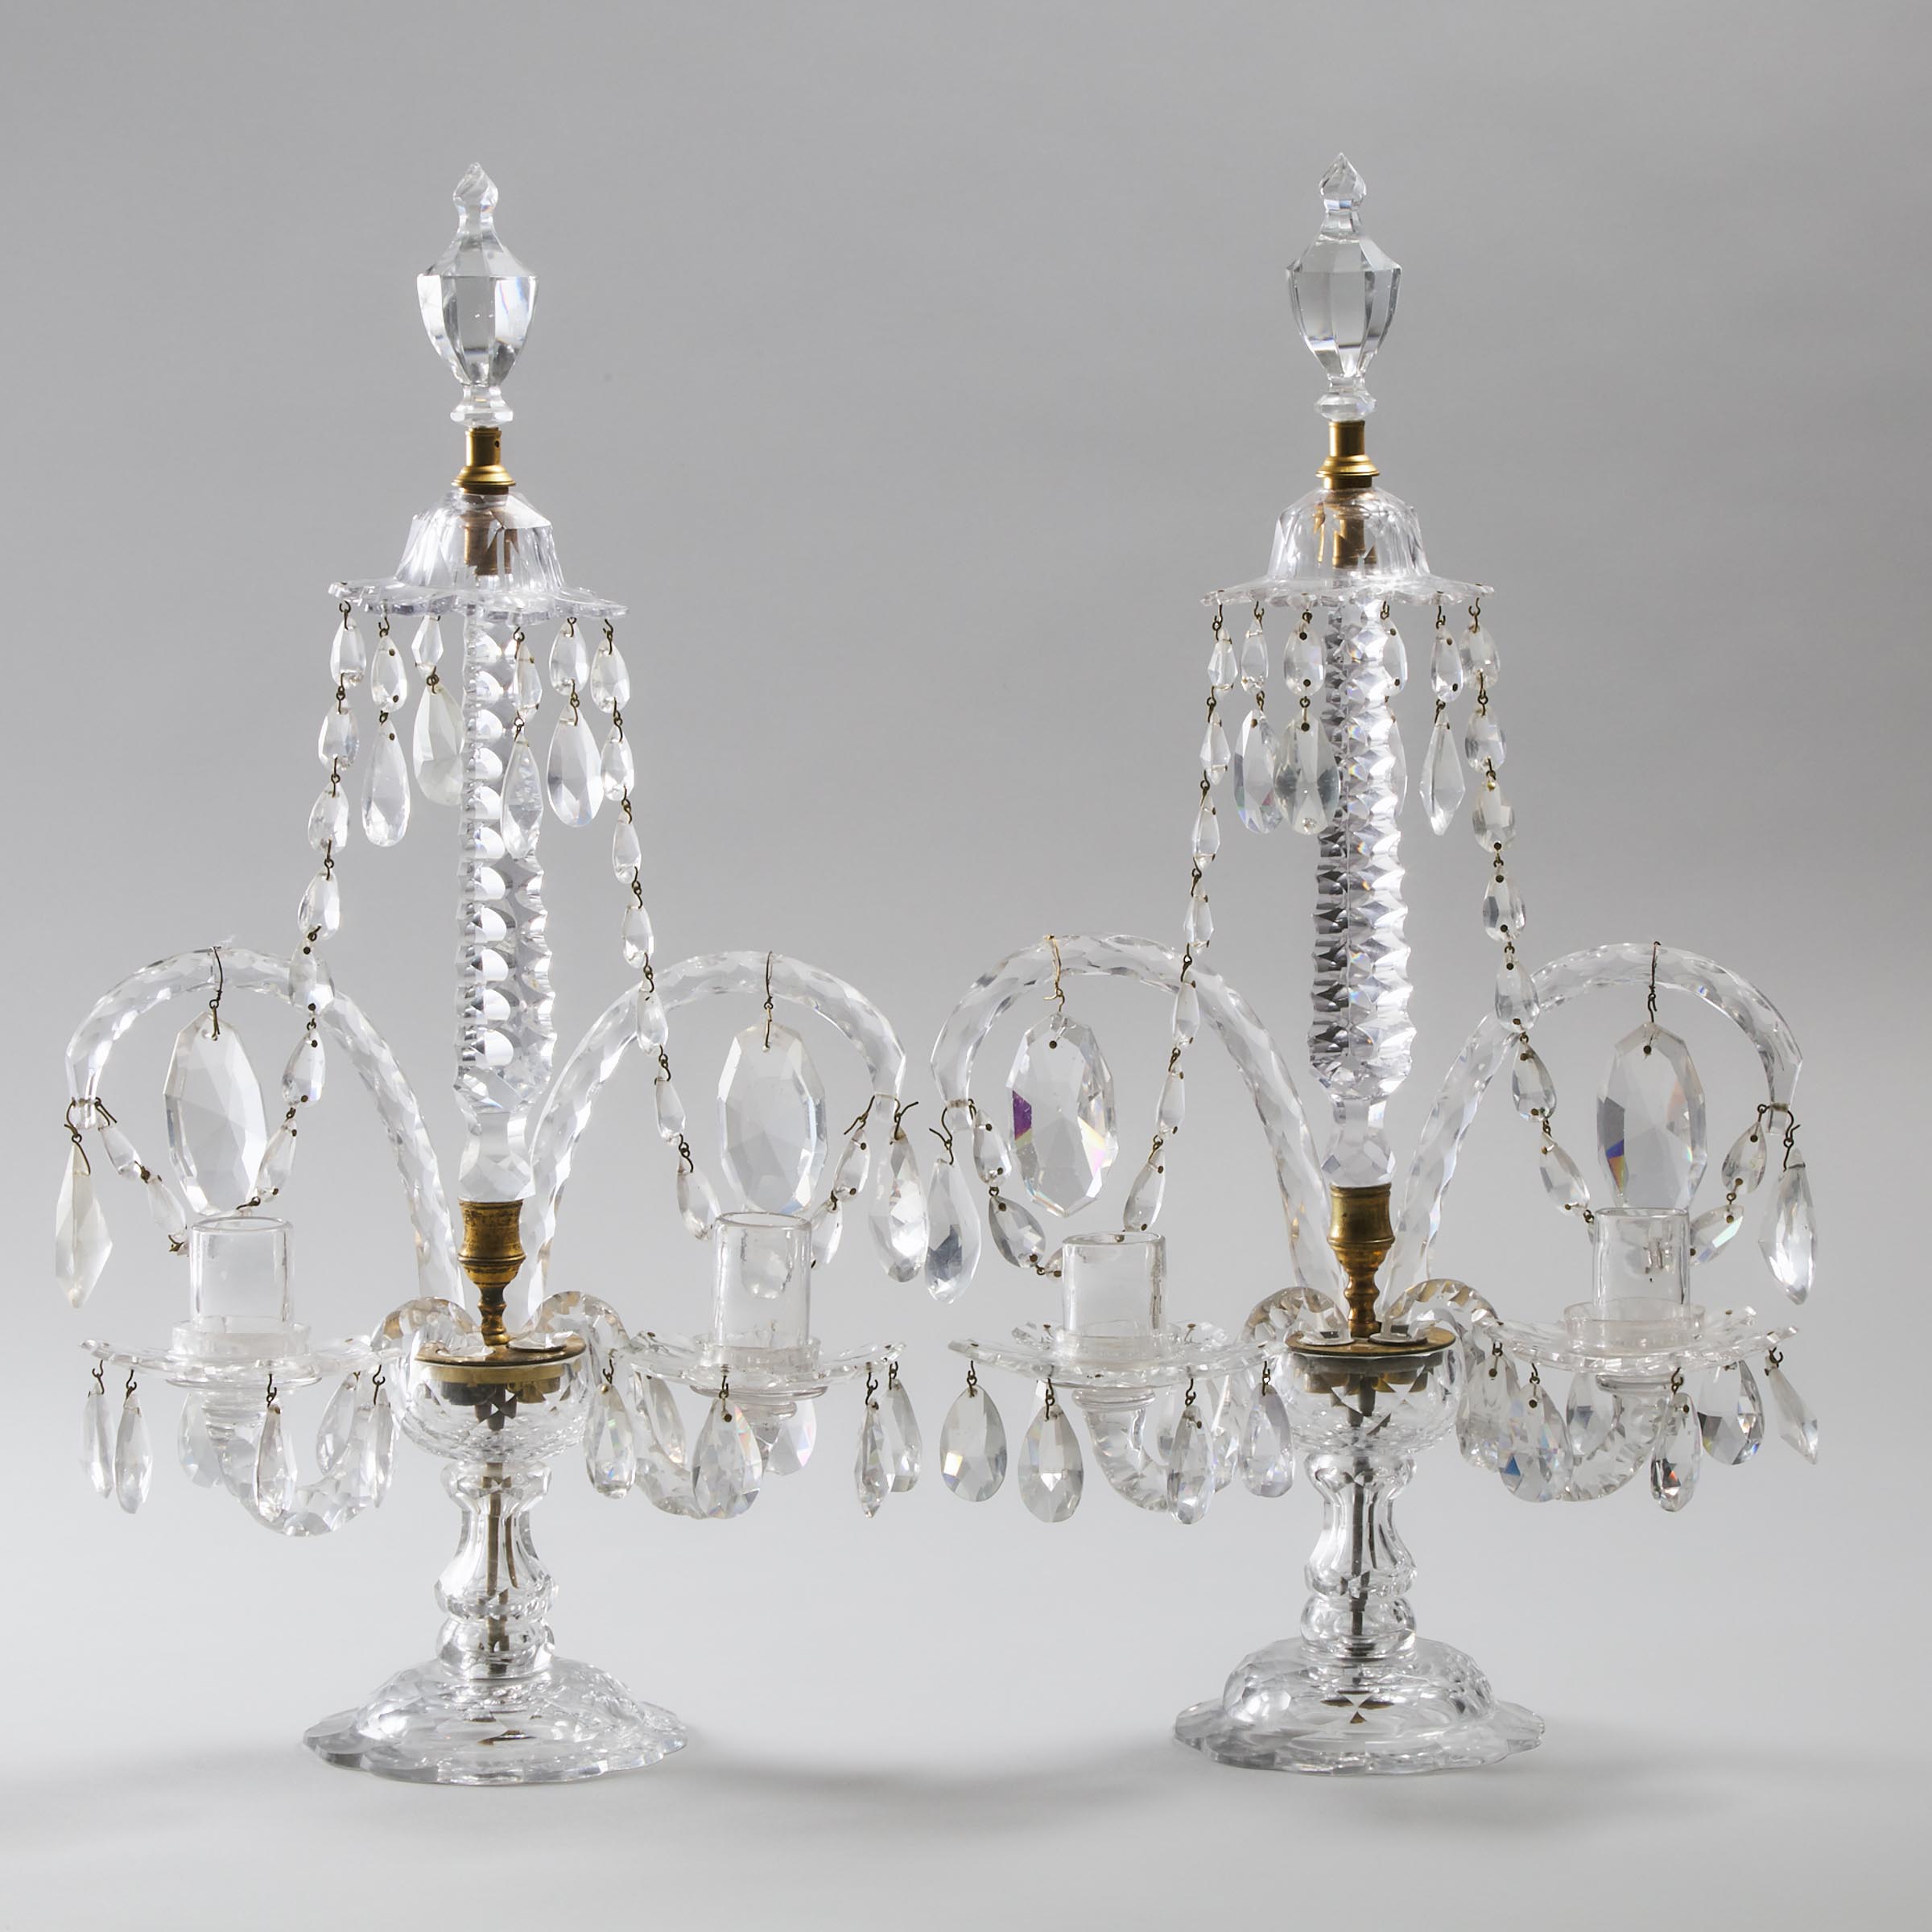 Pair of Anglo-Irish Cut Glass Two-Light Girandoles, early 19th century